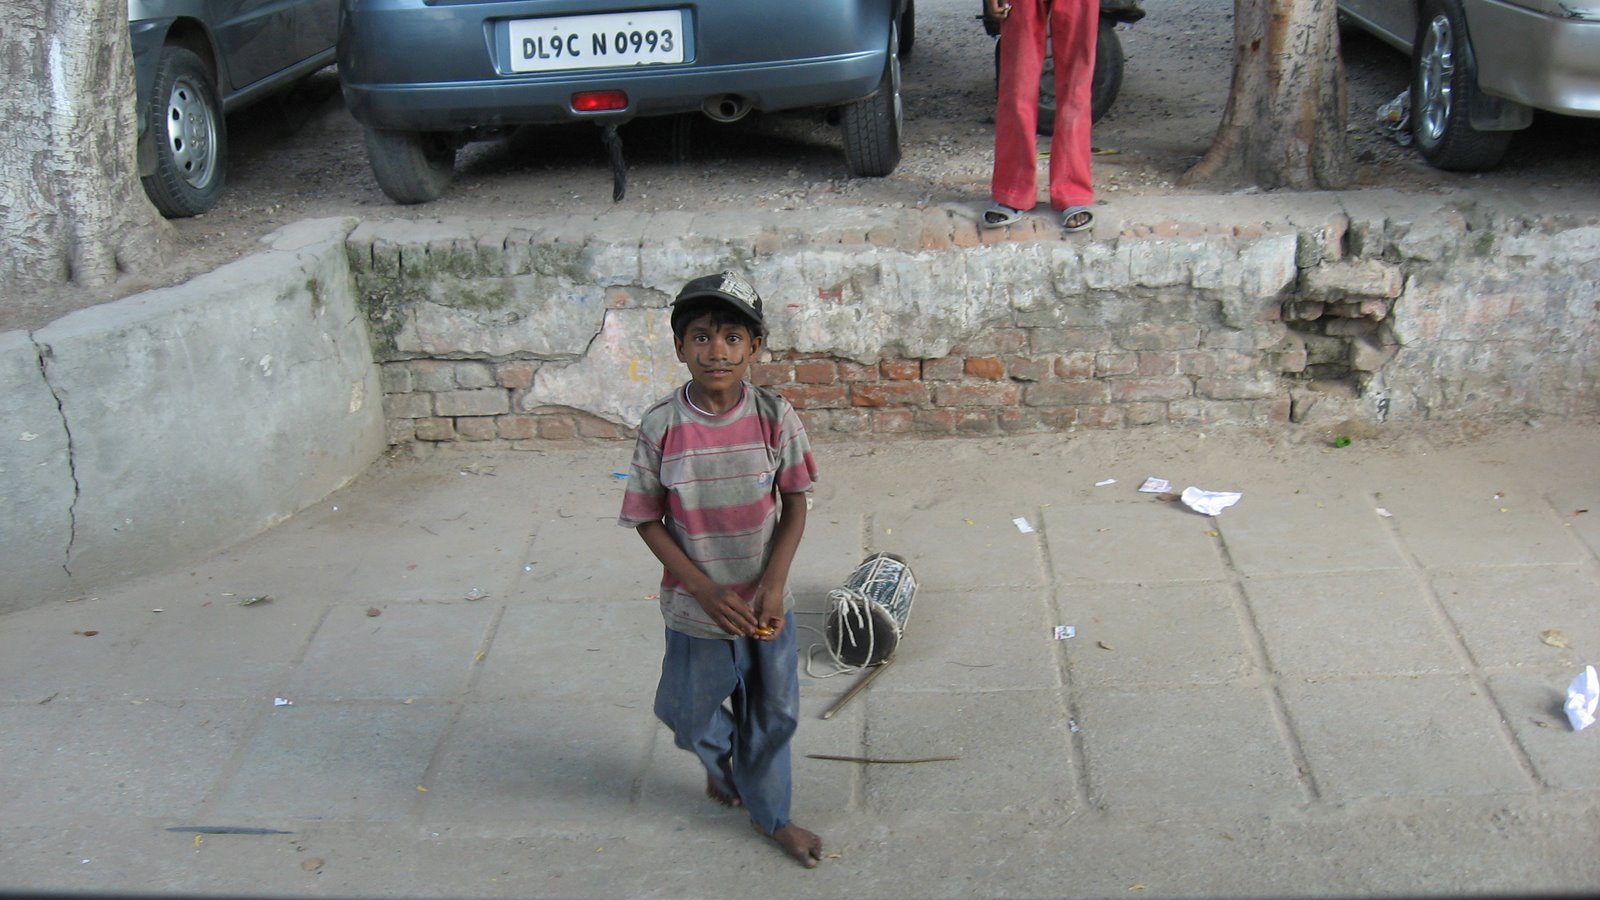 Boy in India